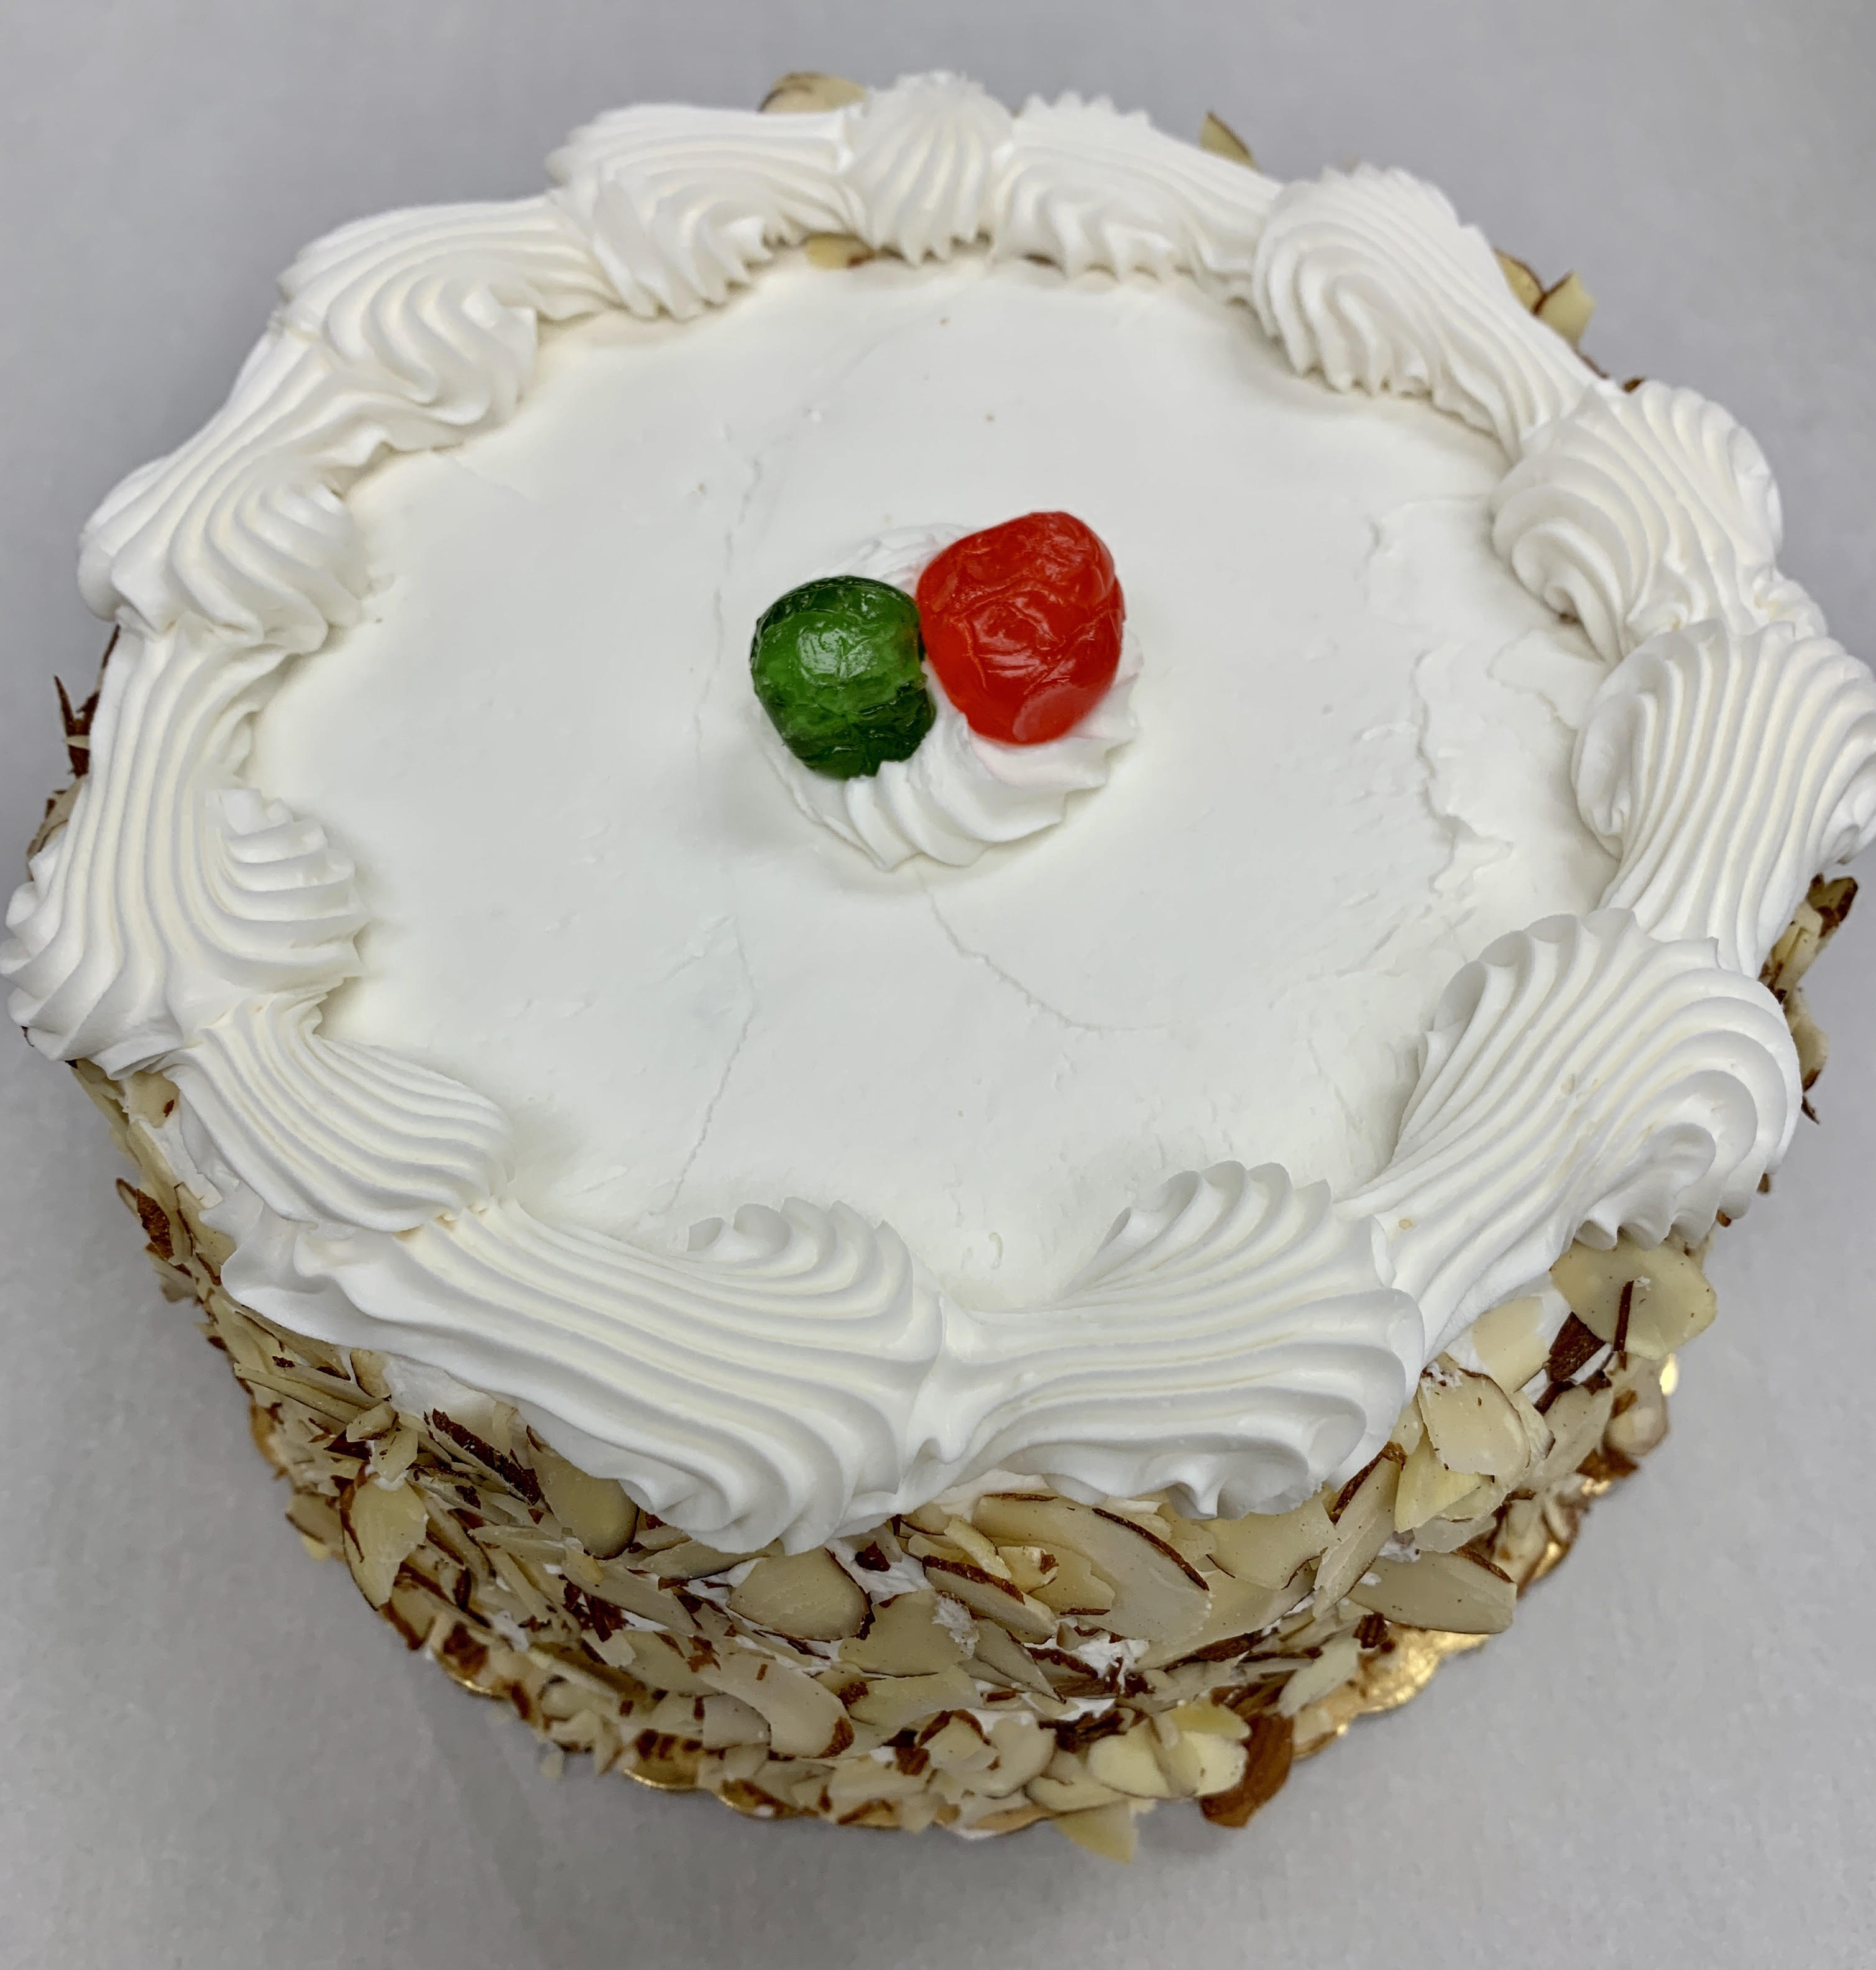 Corropolese 7” Italian Rum Cake